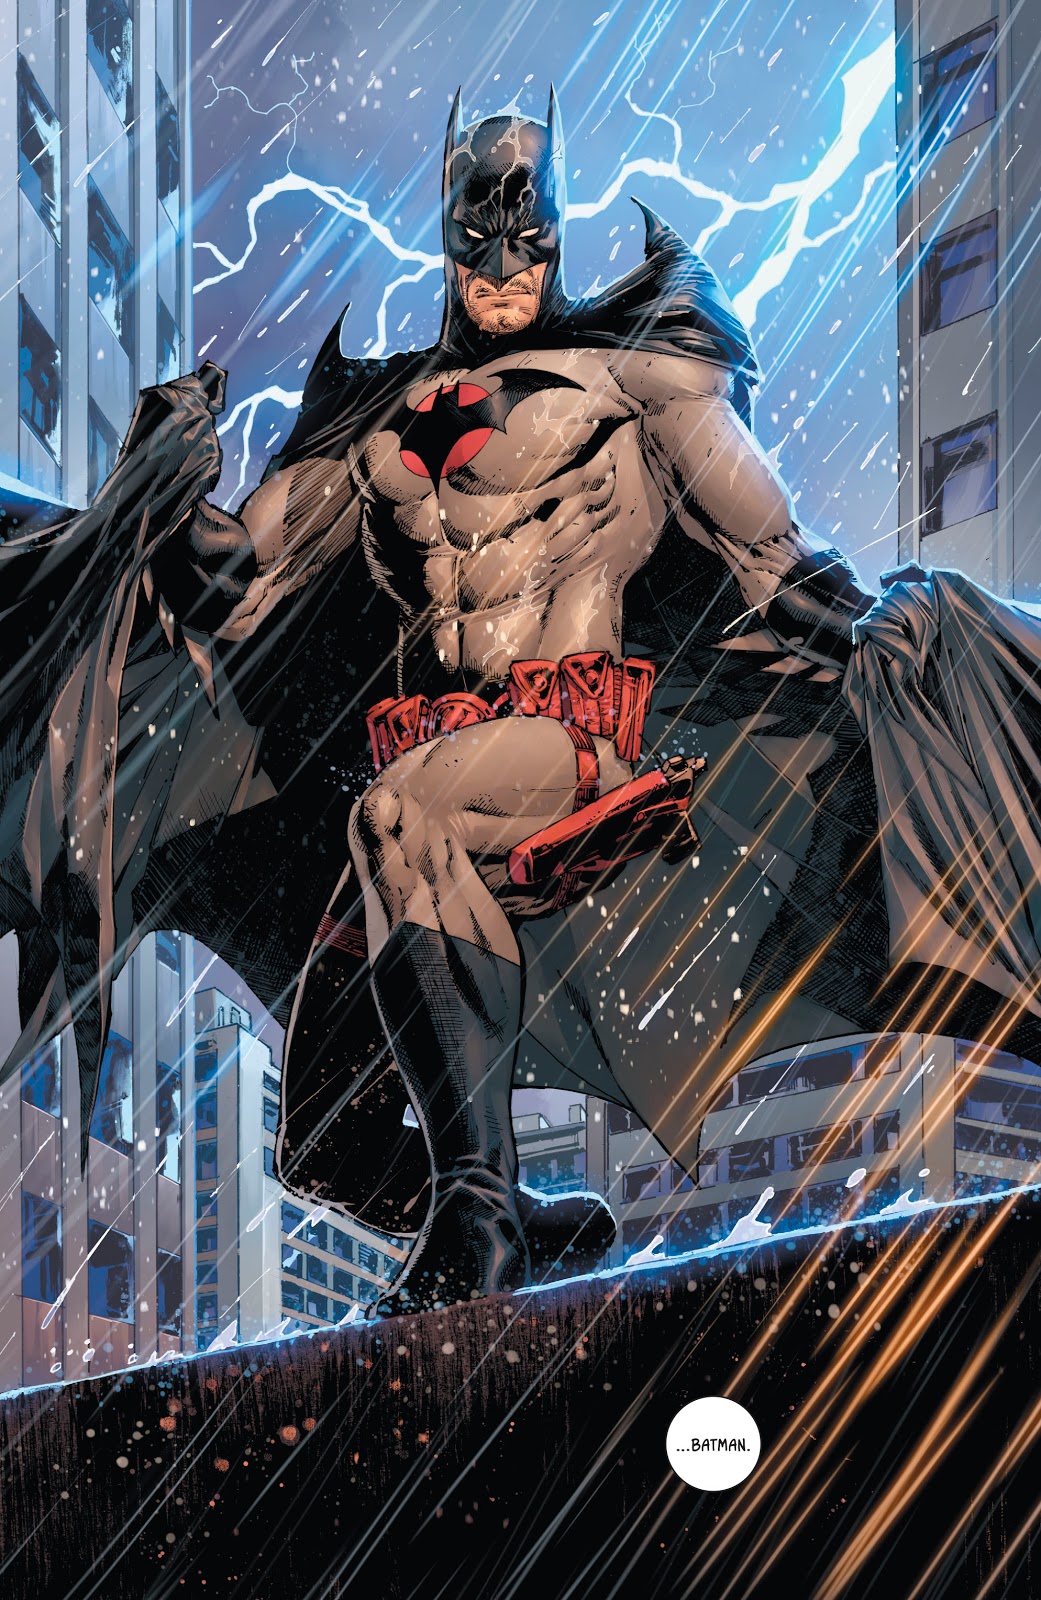 Batman Thomas Wayne (Batman Vol. 3 #75)